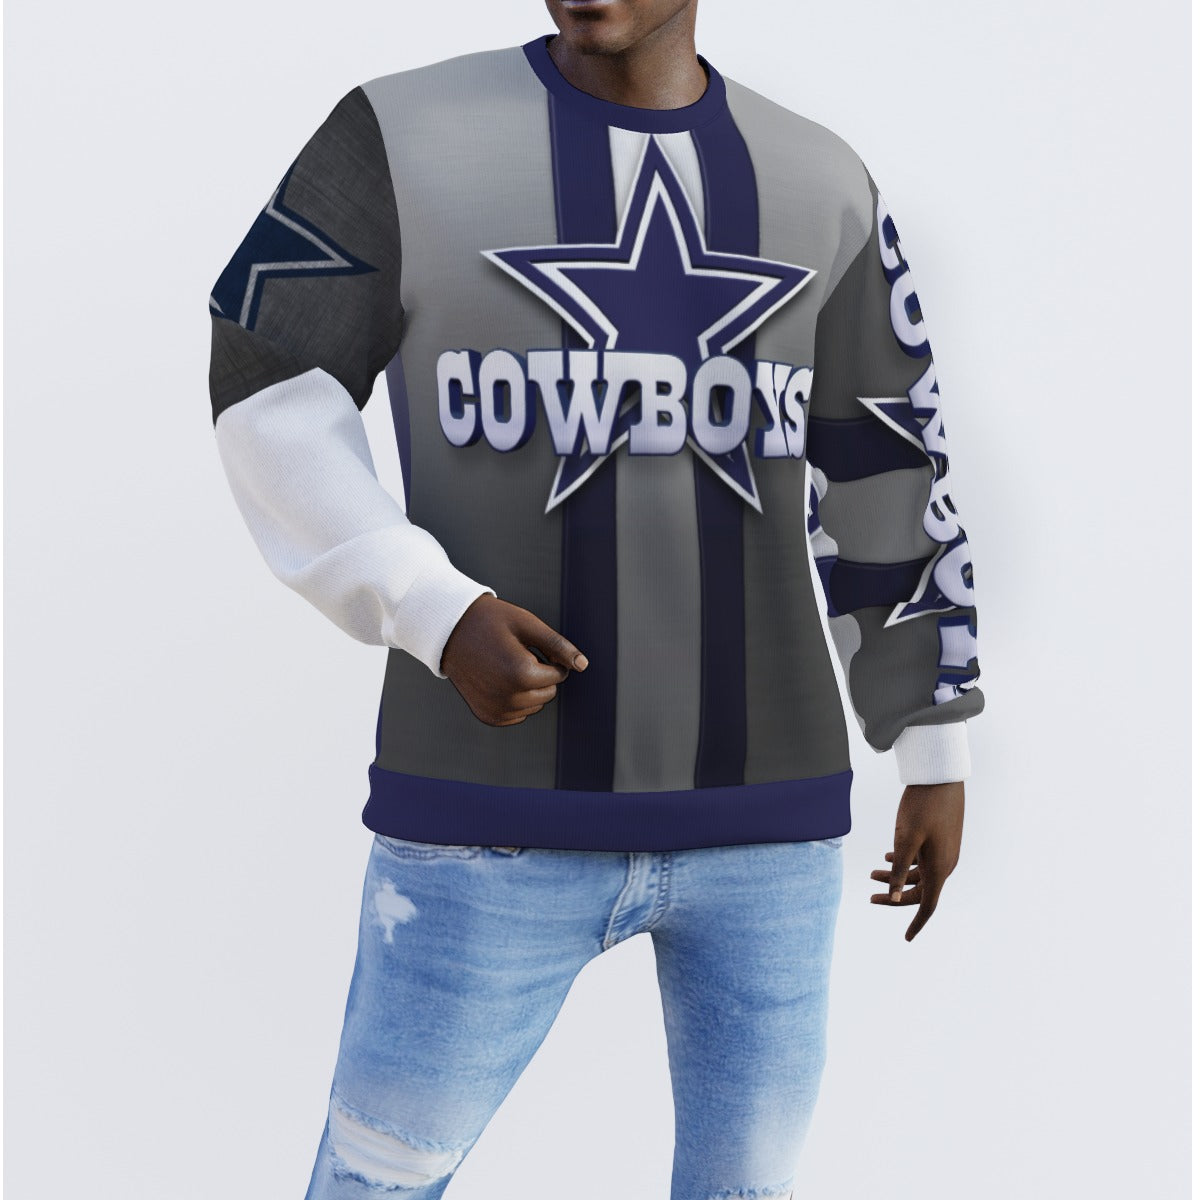 Yoycol Dallas Cowboys Game Day All-Over Men's Sweater S / White